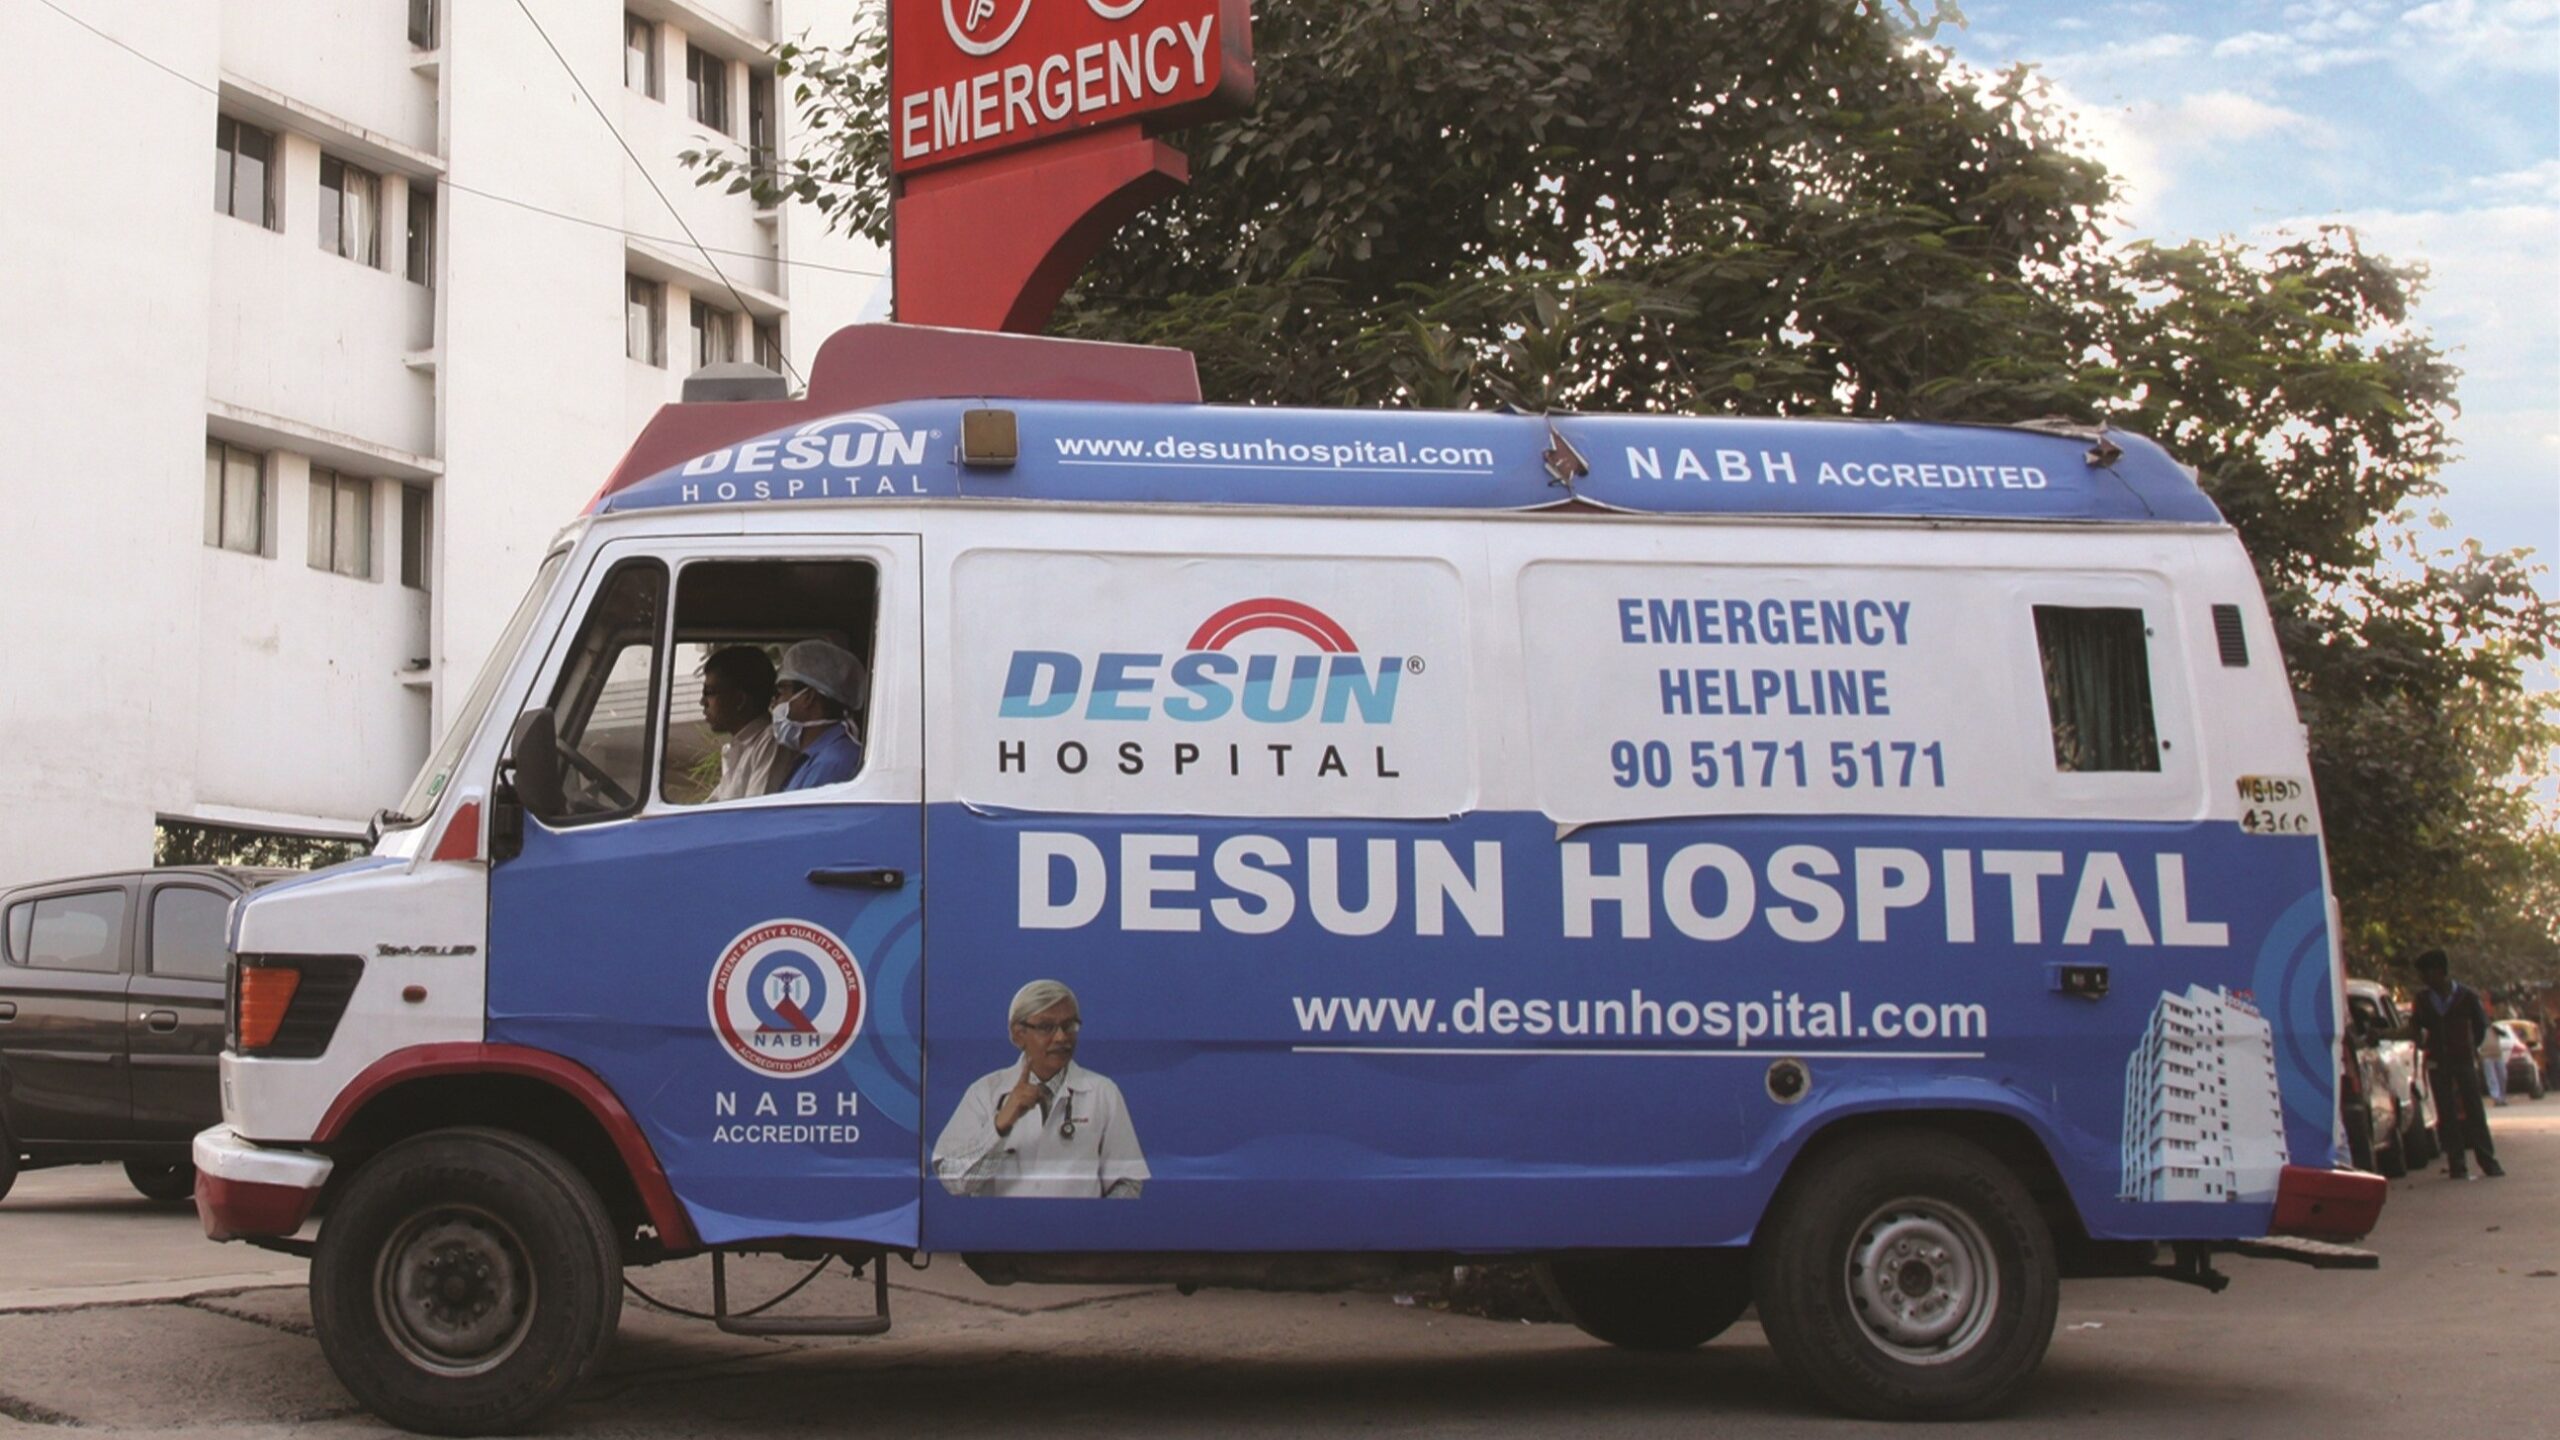 Desun Hospital 24 Hours Ambulance Assistance